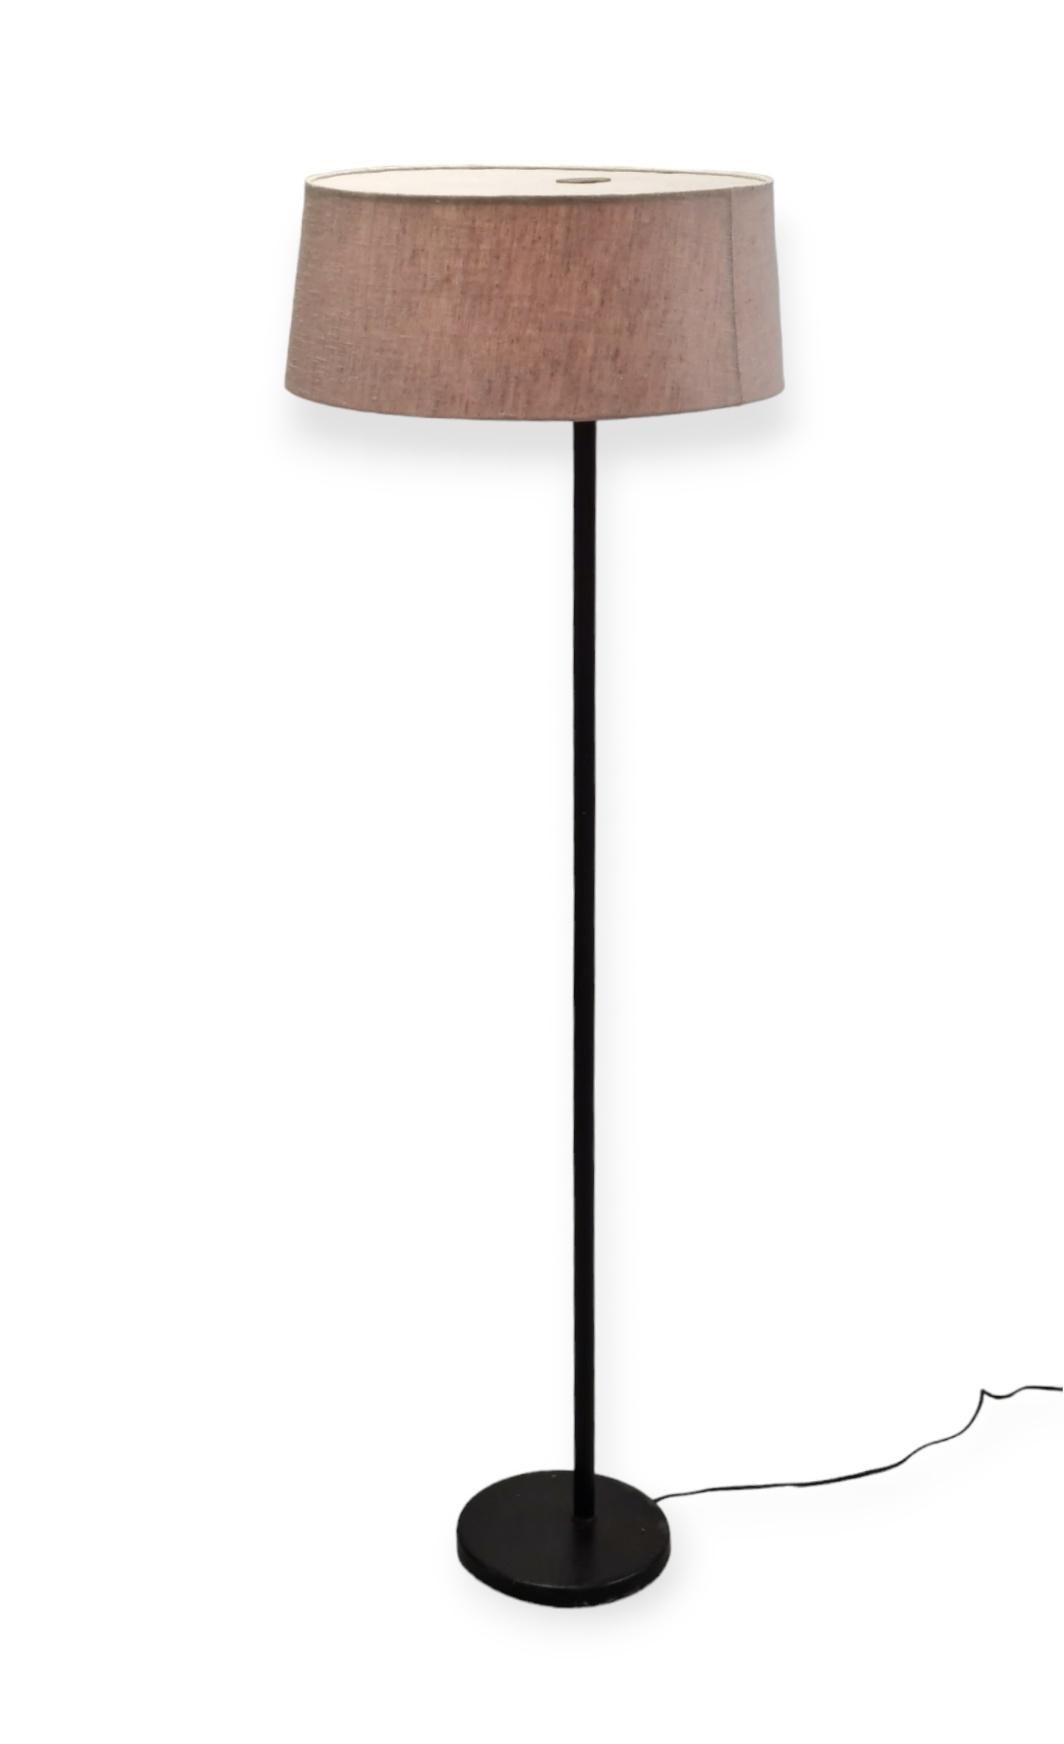 Maija Heikinheimo Floor Lamp MH801, Valaistustyö for Artek 1950s For Sale 2